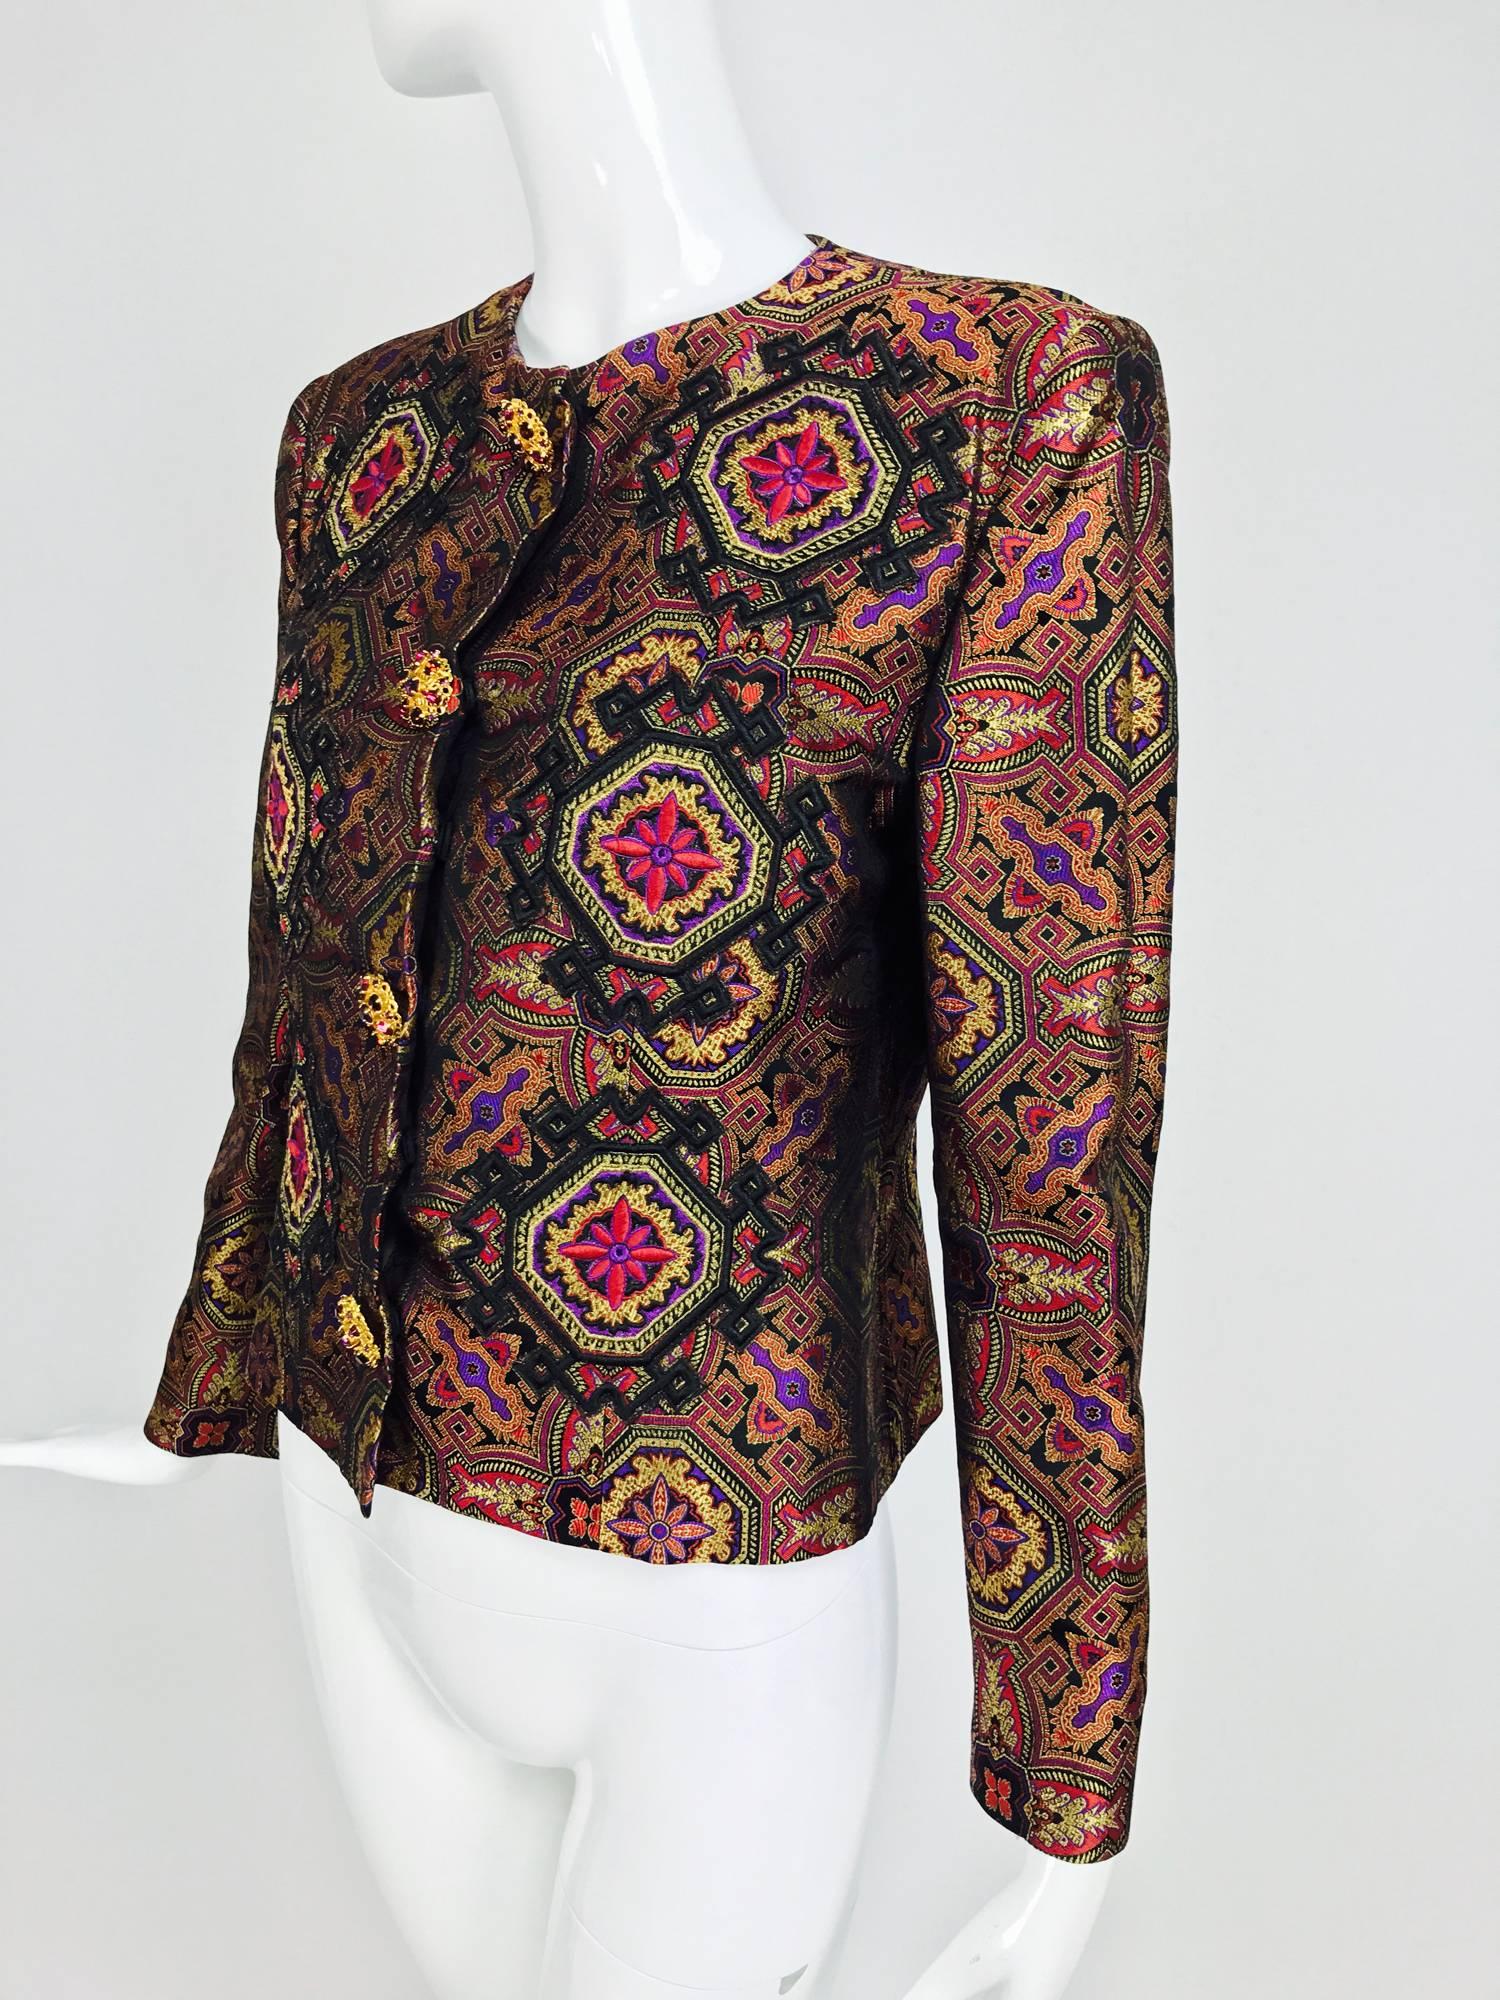 Vintage Christian LaCroix jewel tone brocade jacket jewel buttons 1980s 3